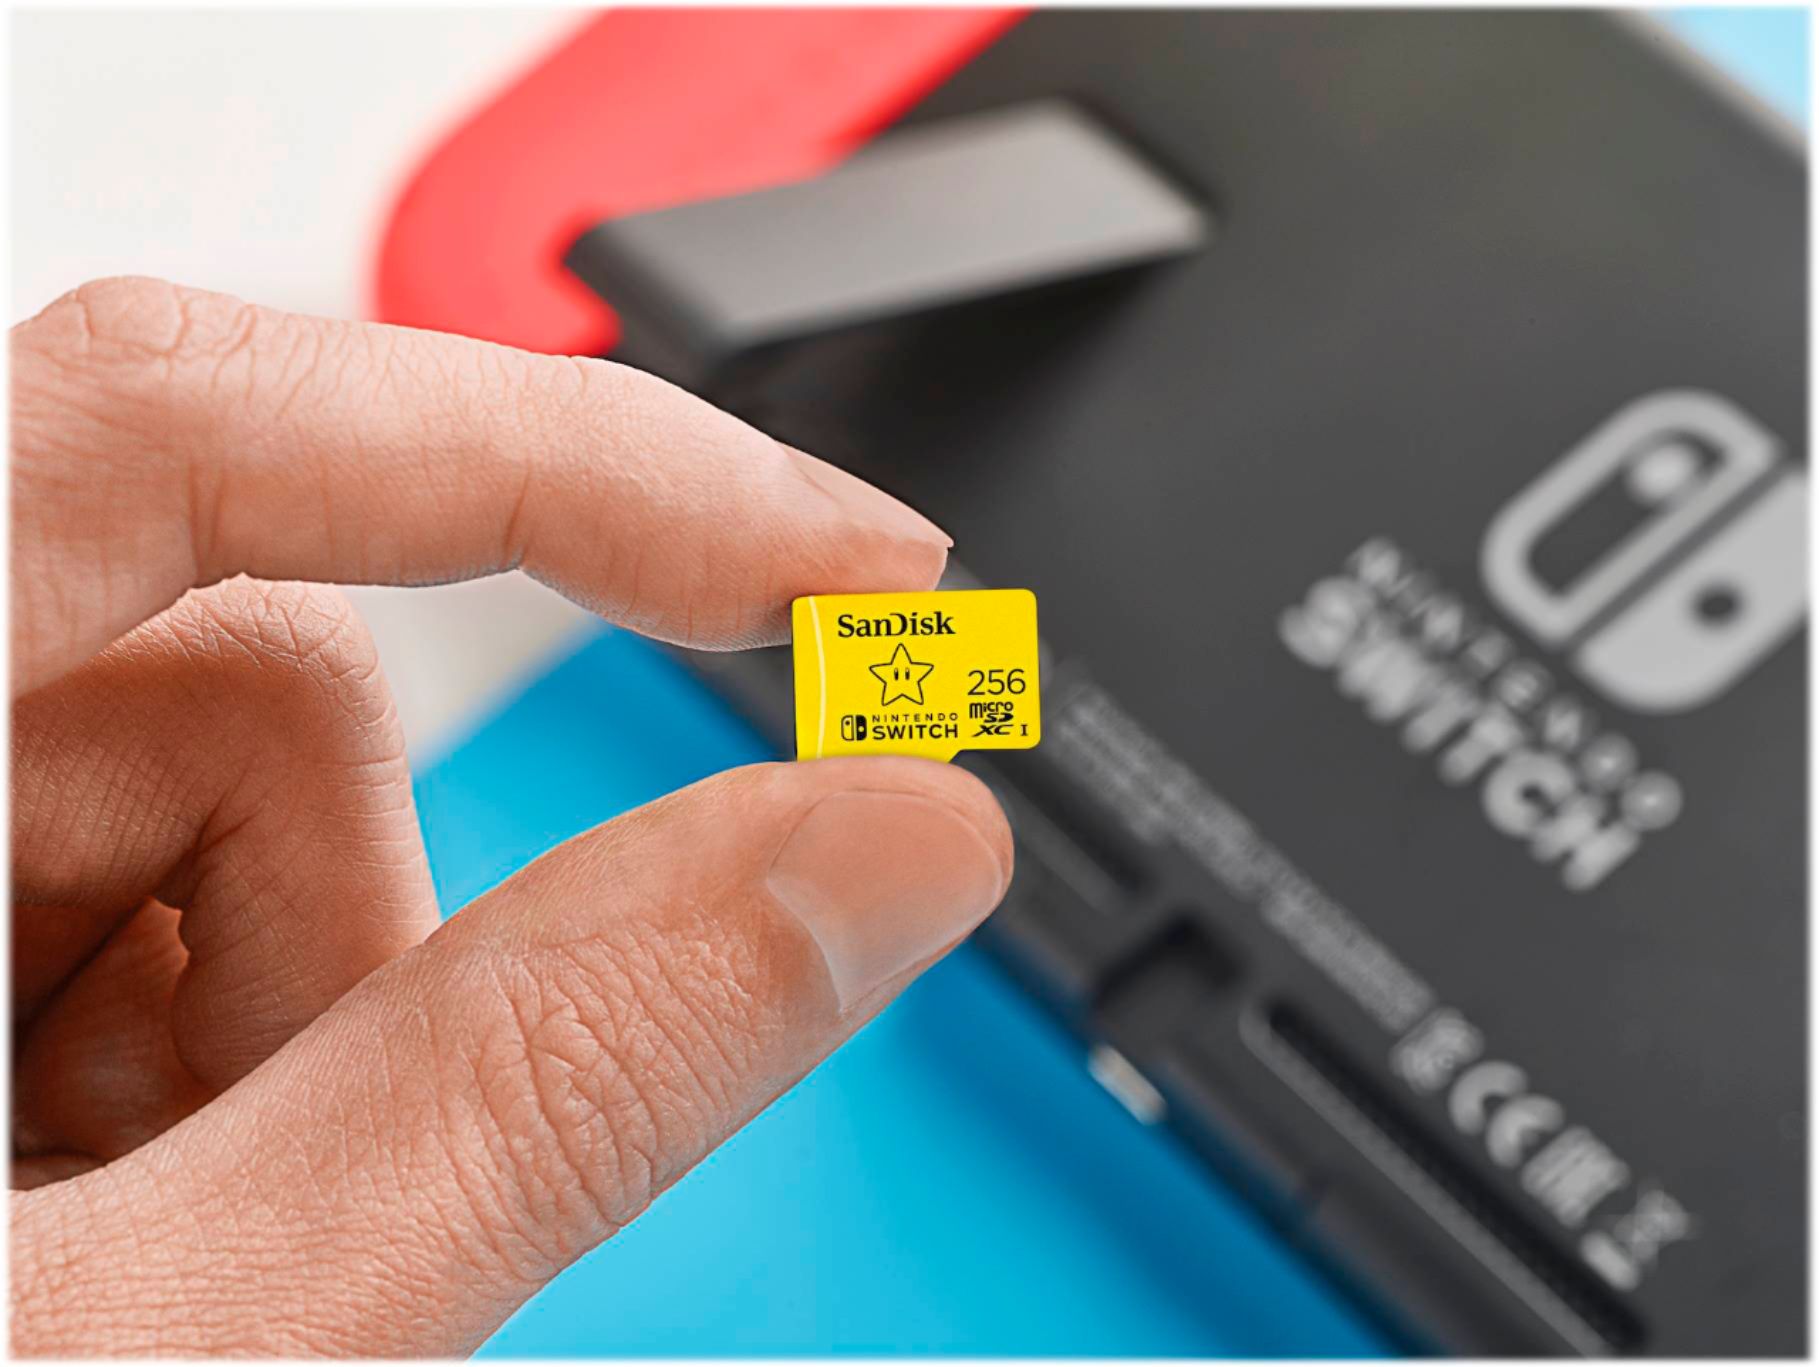 SanDisk 256GB microSDXC UHS-I Memory Card for Nintendo Switch